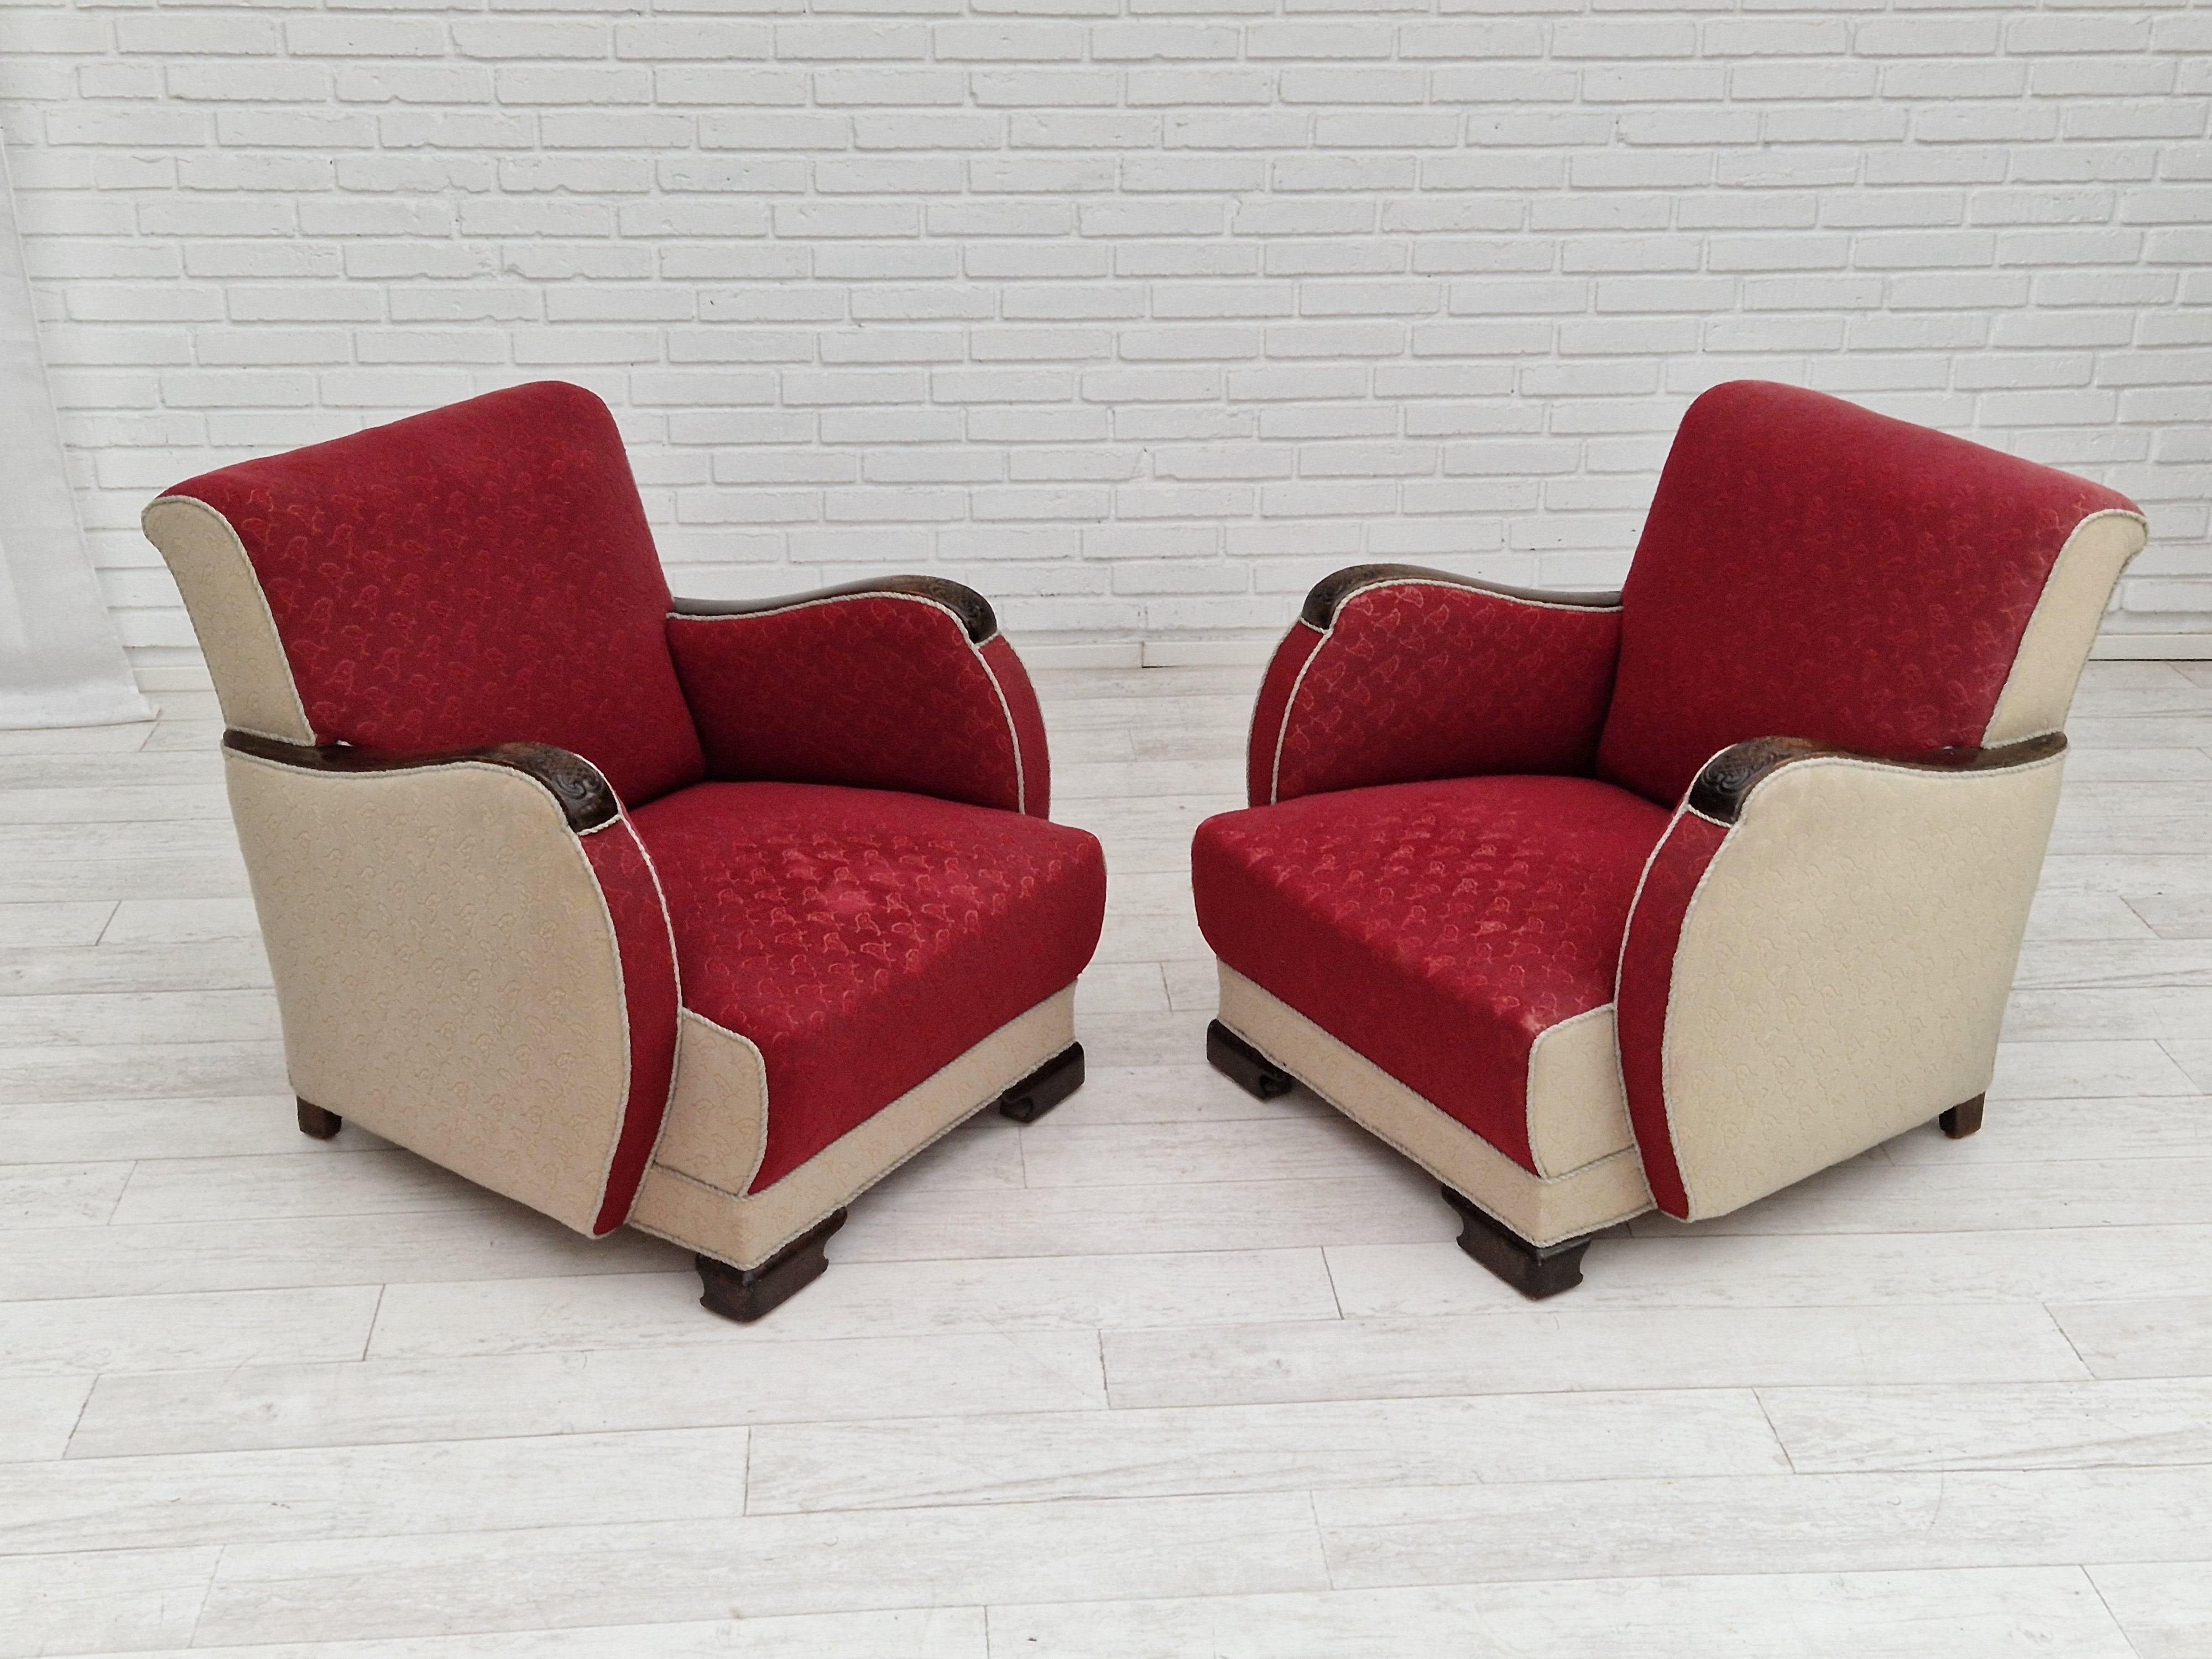 Danish 1950s, Scandinavian Art Deco Chairs, Original Condition For Sale